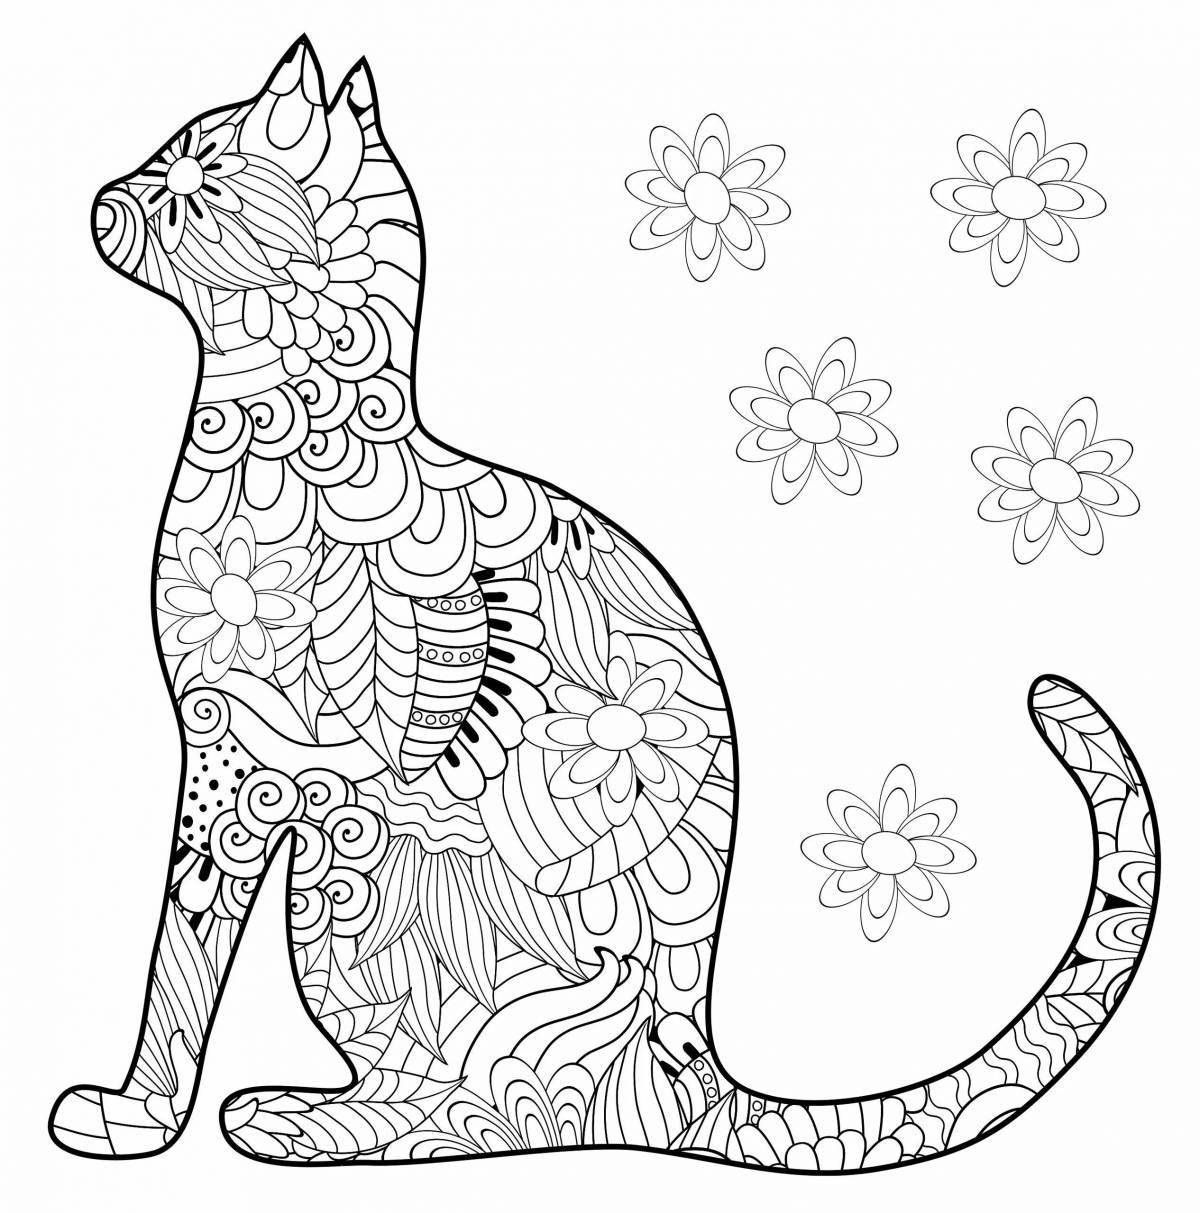 Adorable cat mandala coloring page